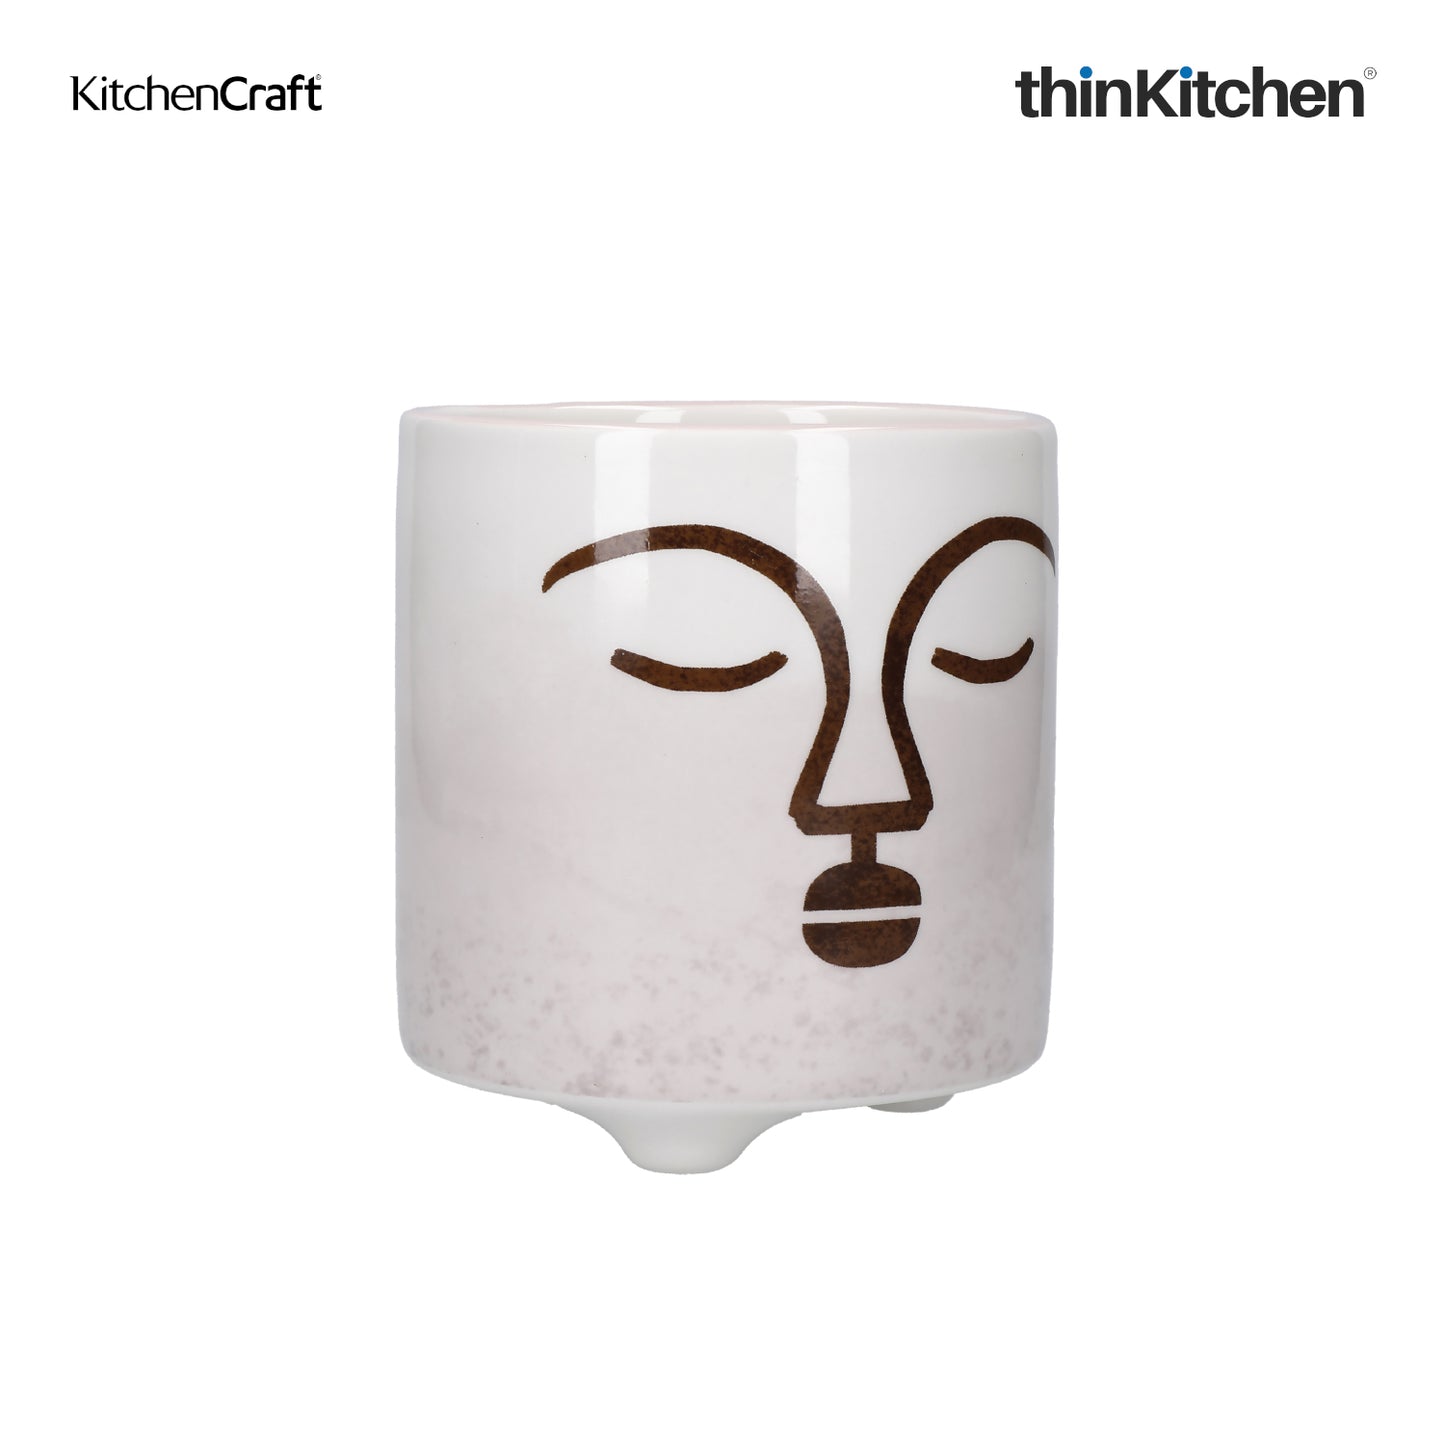 Kitchencraft Mini Planter With Terracotta Face Design